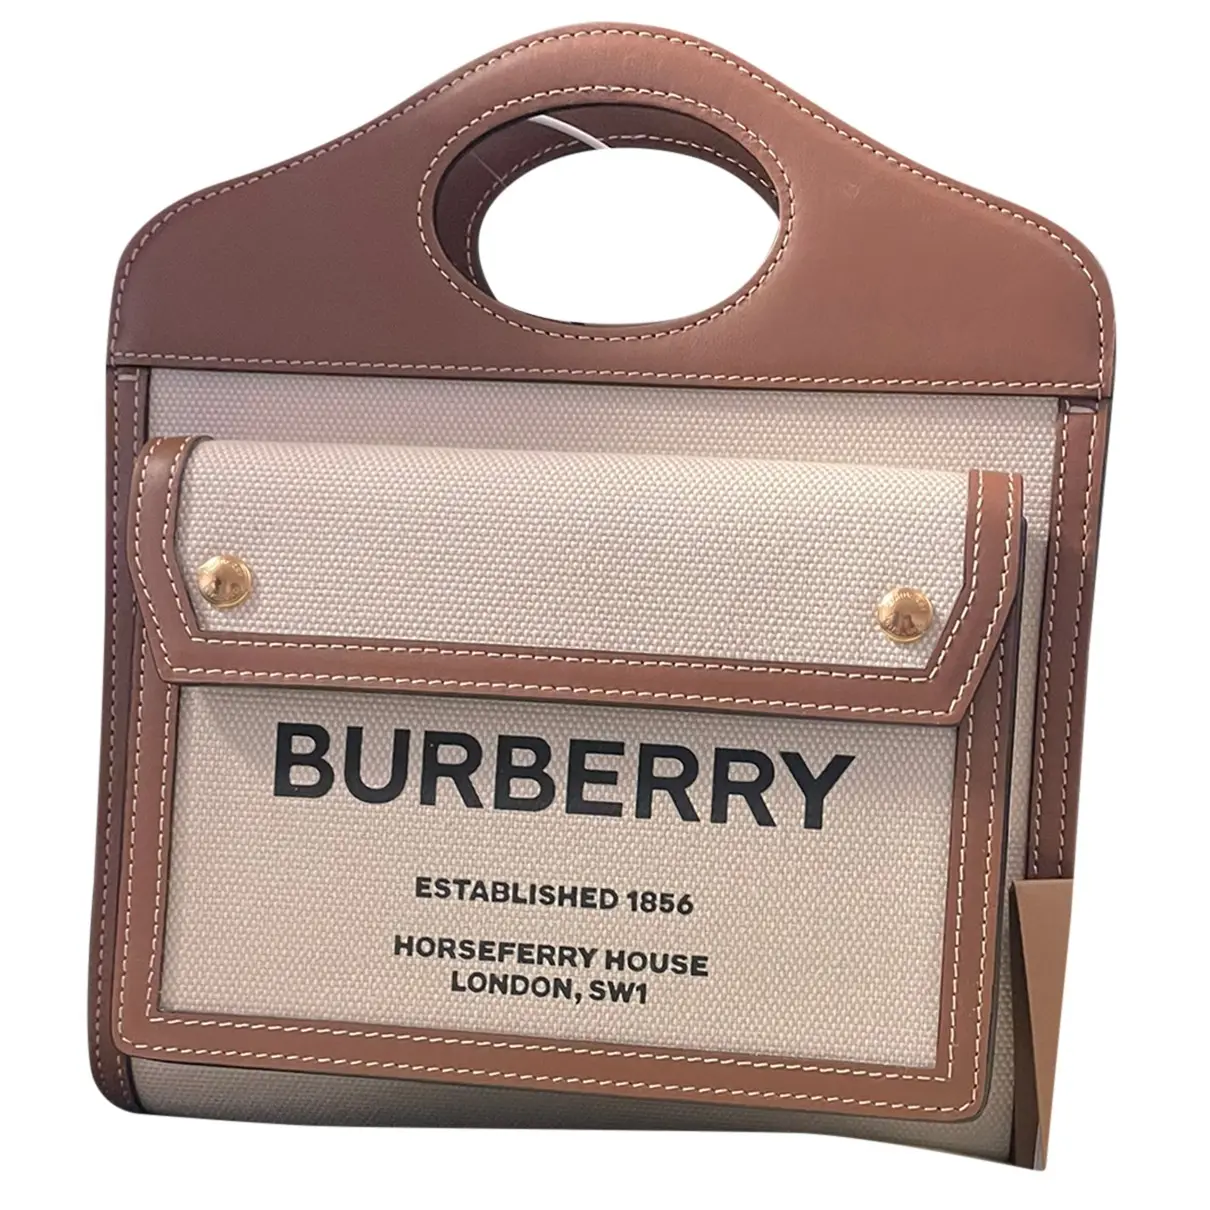 Pocket leather handbag Burberry